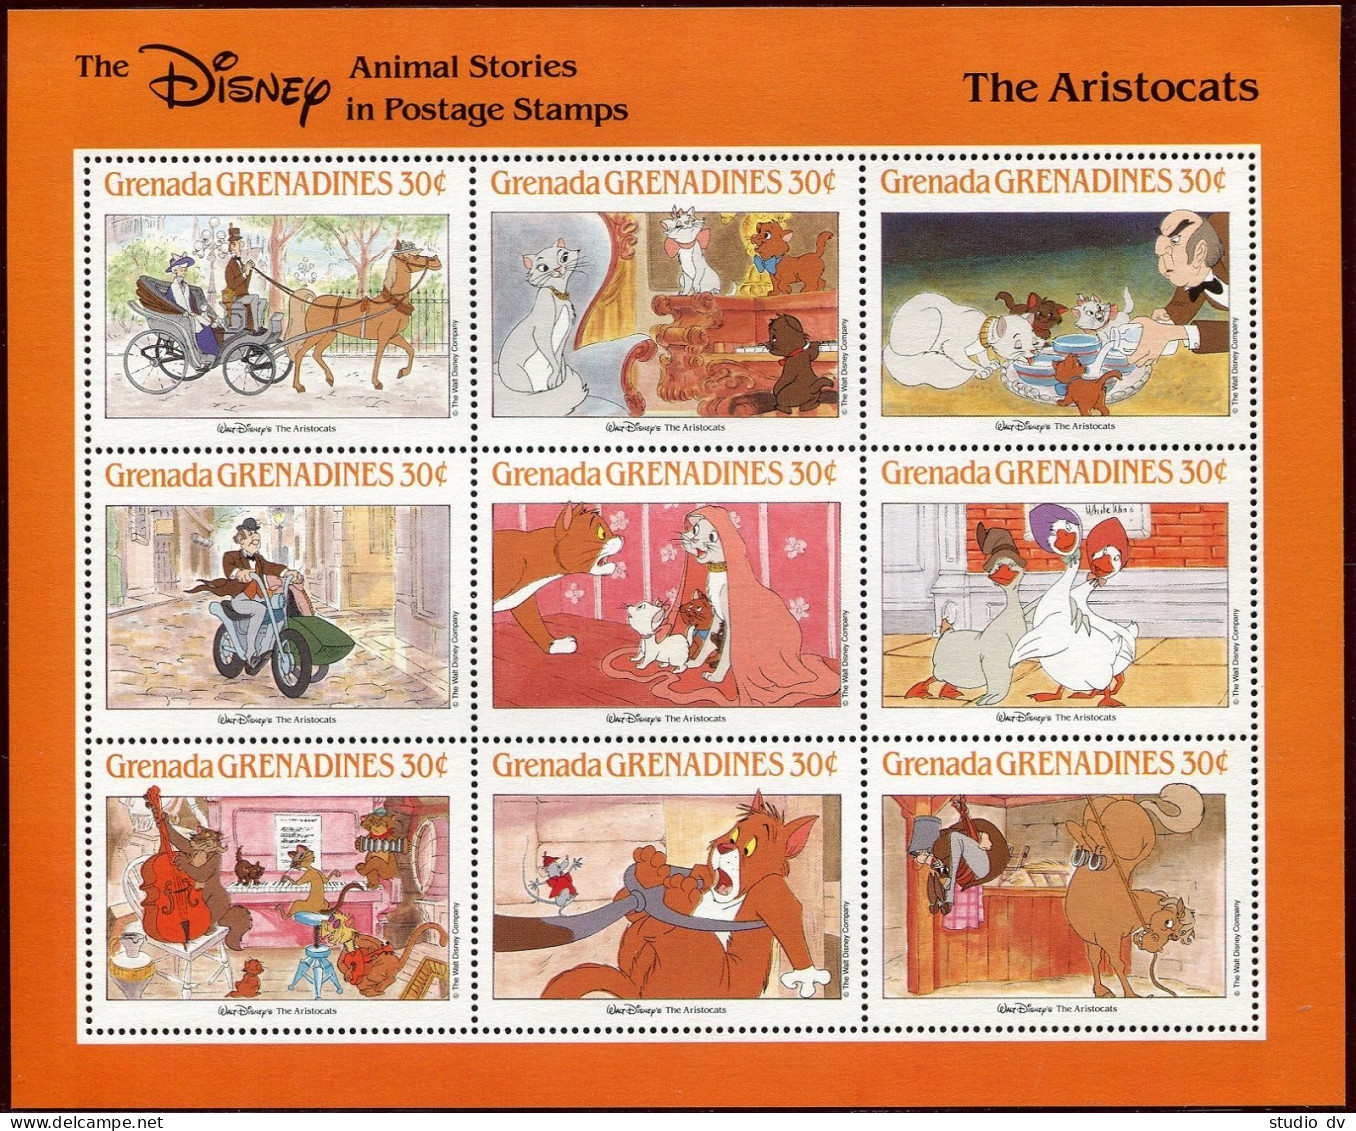 Grenada Gren 991 Ai, 997 Sheets, MNH. Walt Disney, 1988. Aristocrats. - Grenada (1974-...)